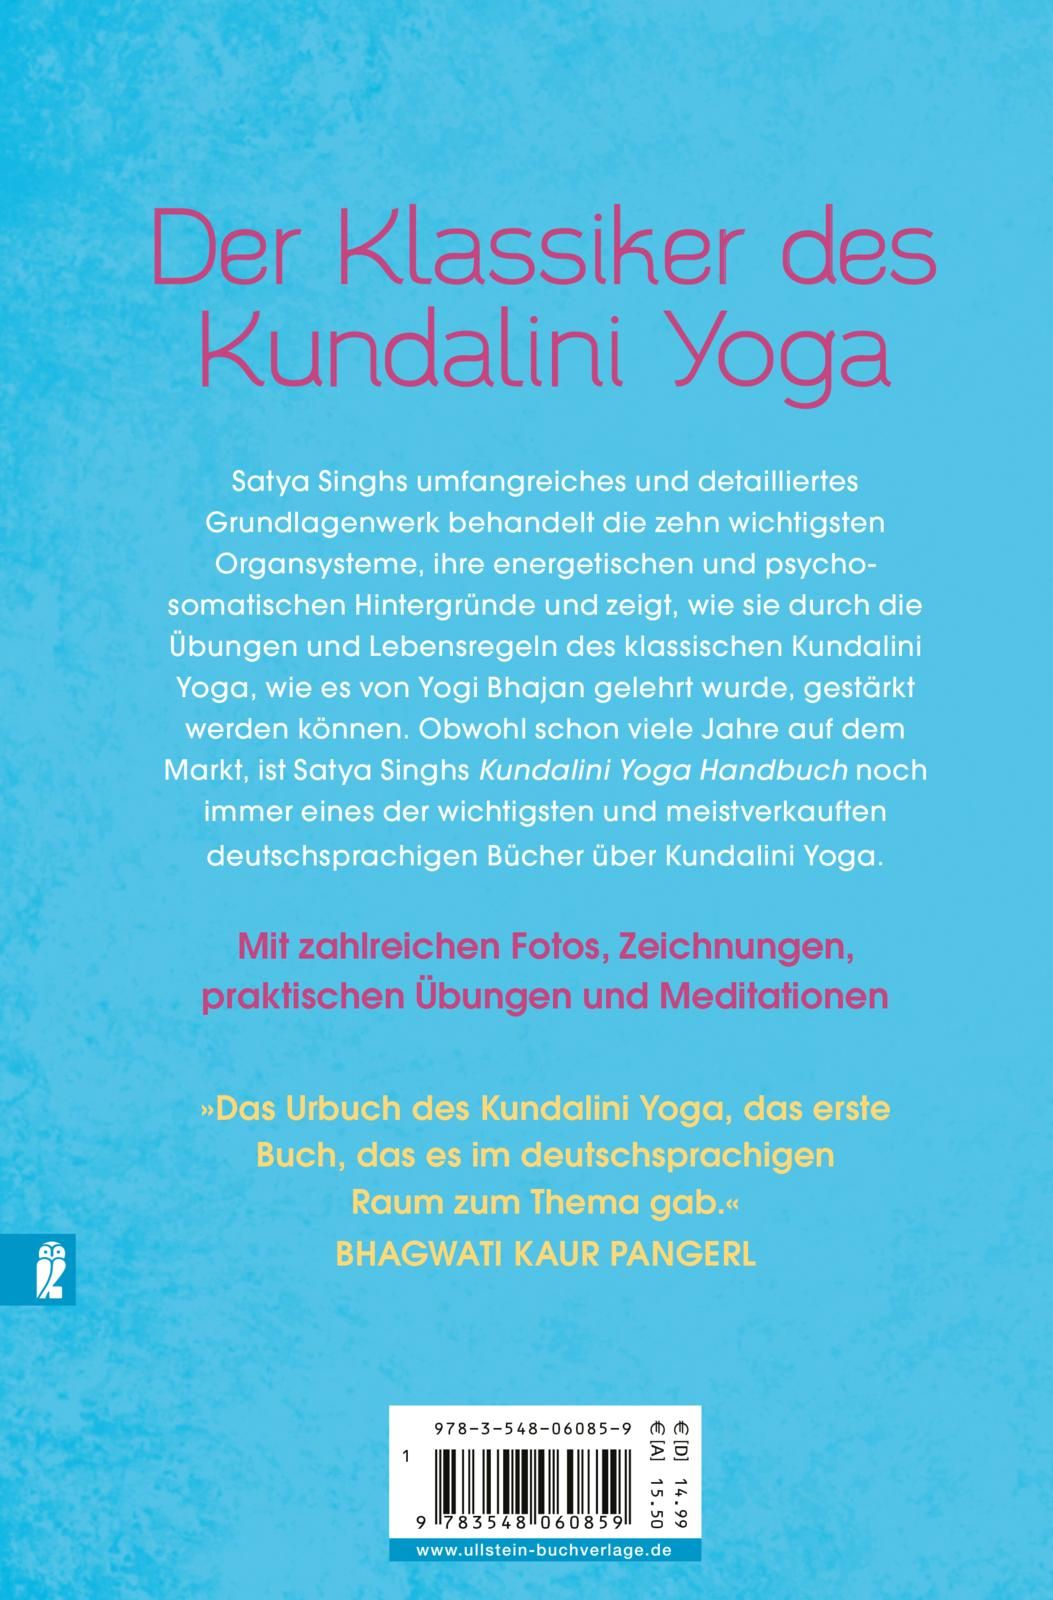 Das Kundalini-Yoga-Handbuch